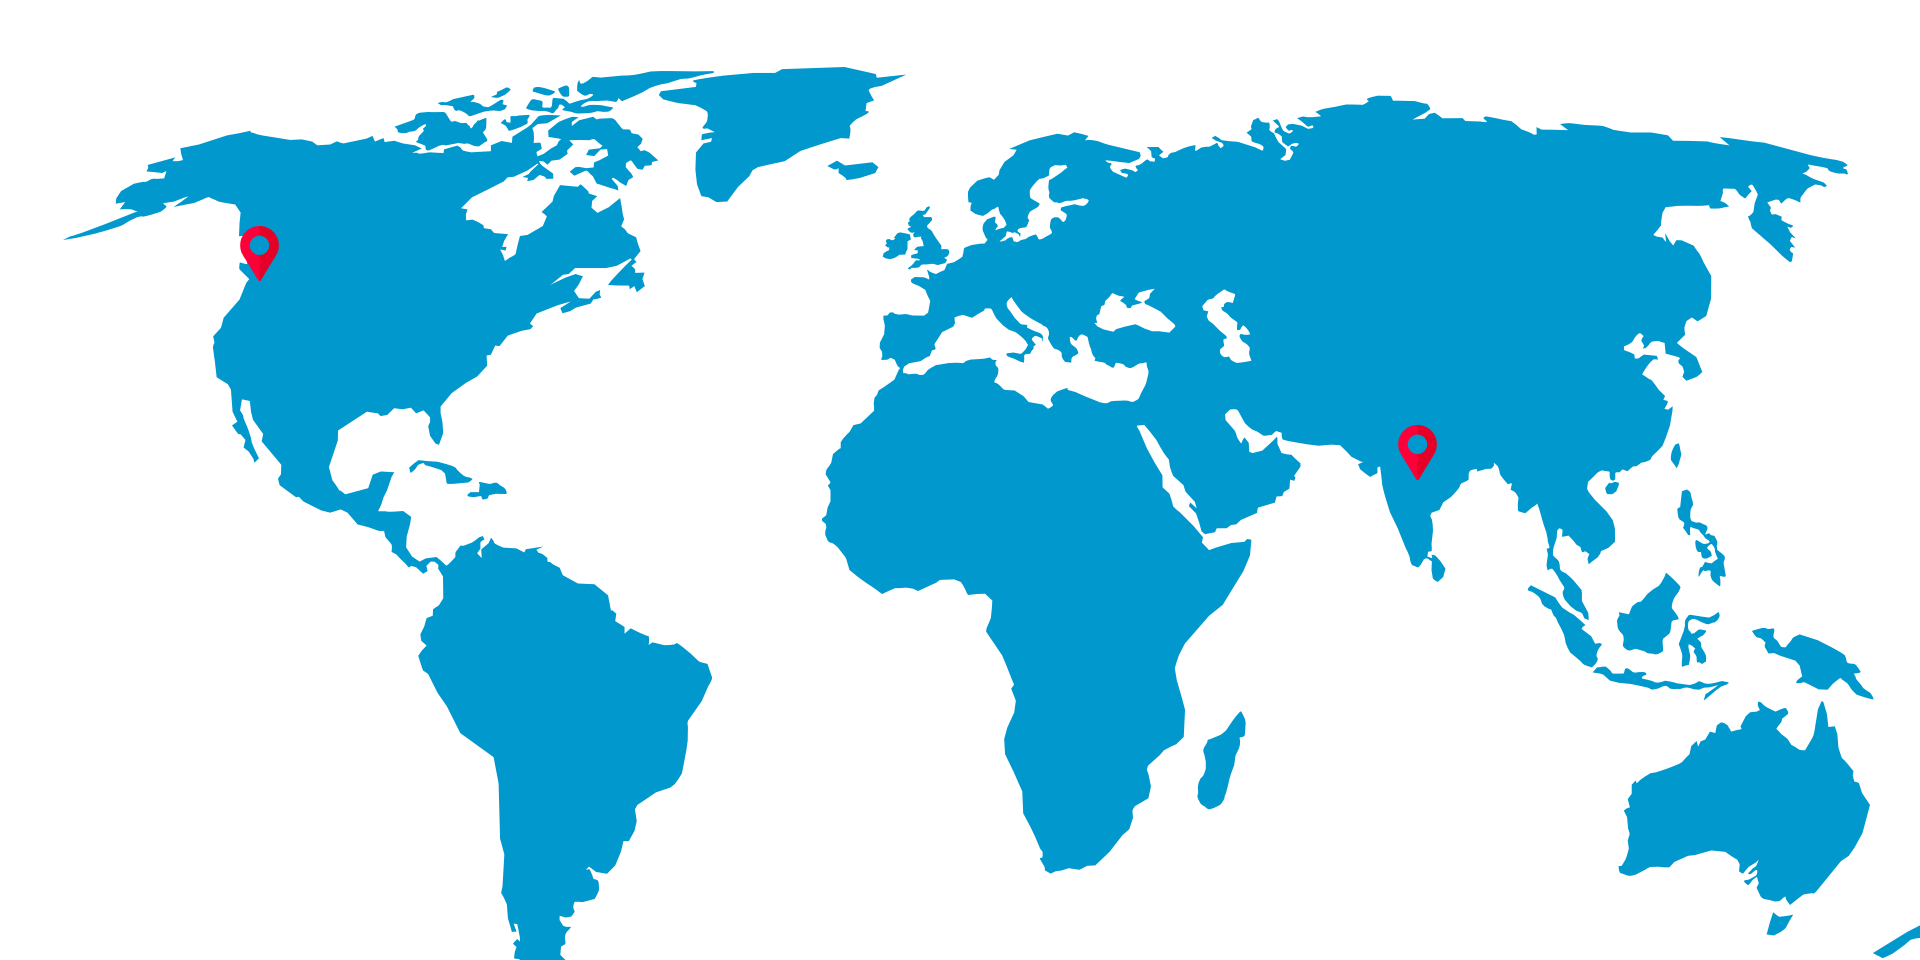 Vancoders-locations-on-World-map-image